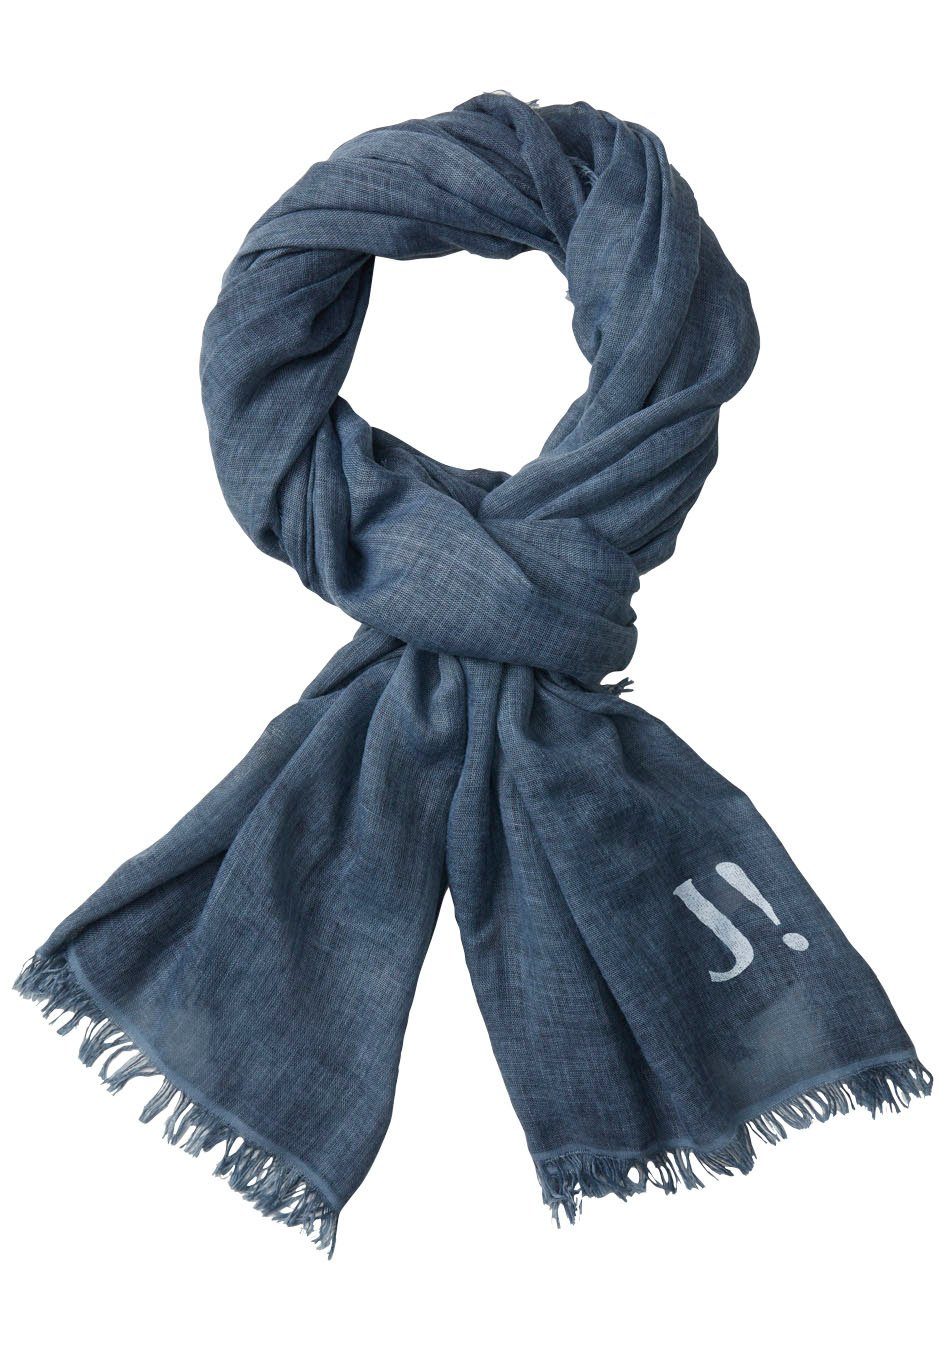 Joop! Schal, Logodruck online kaufen | OTTO